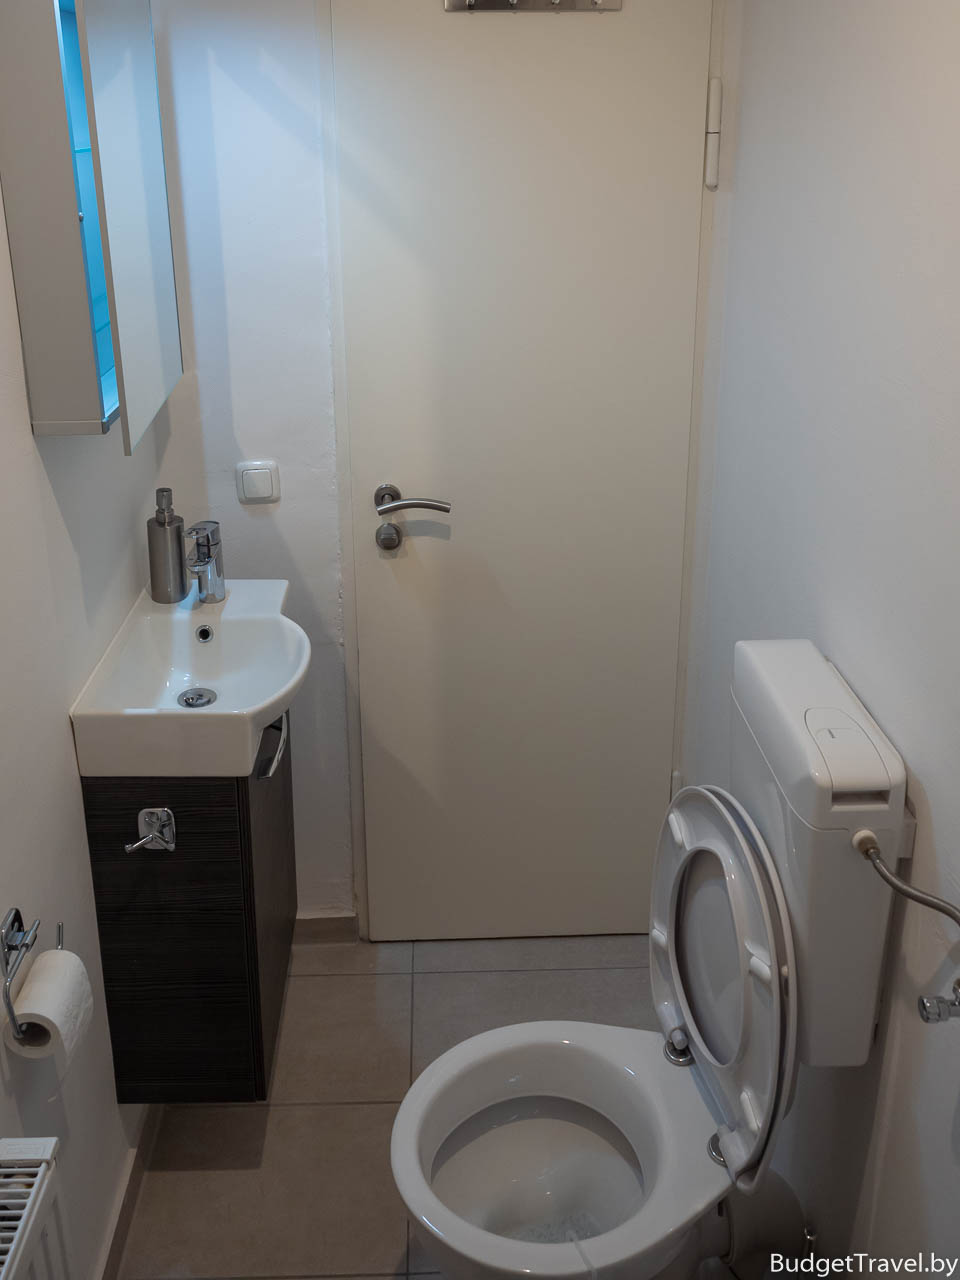 Ванная комната в Бремене